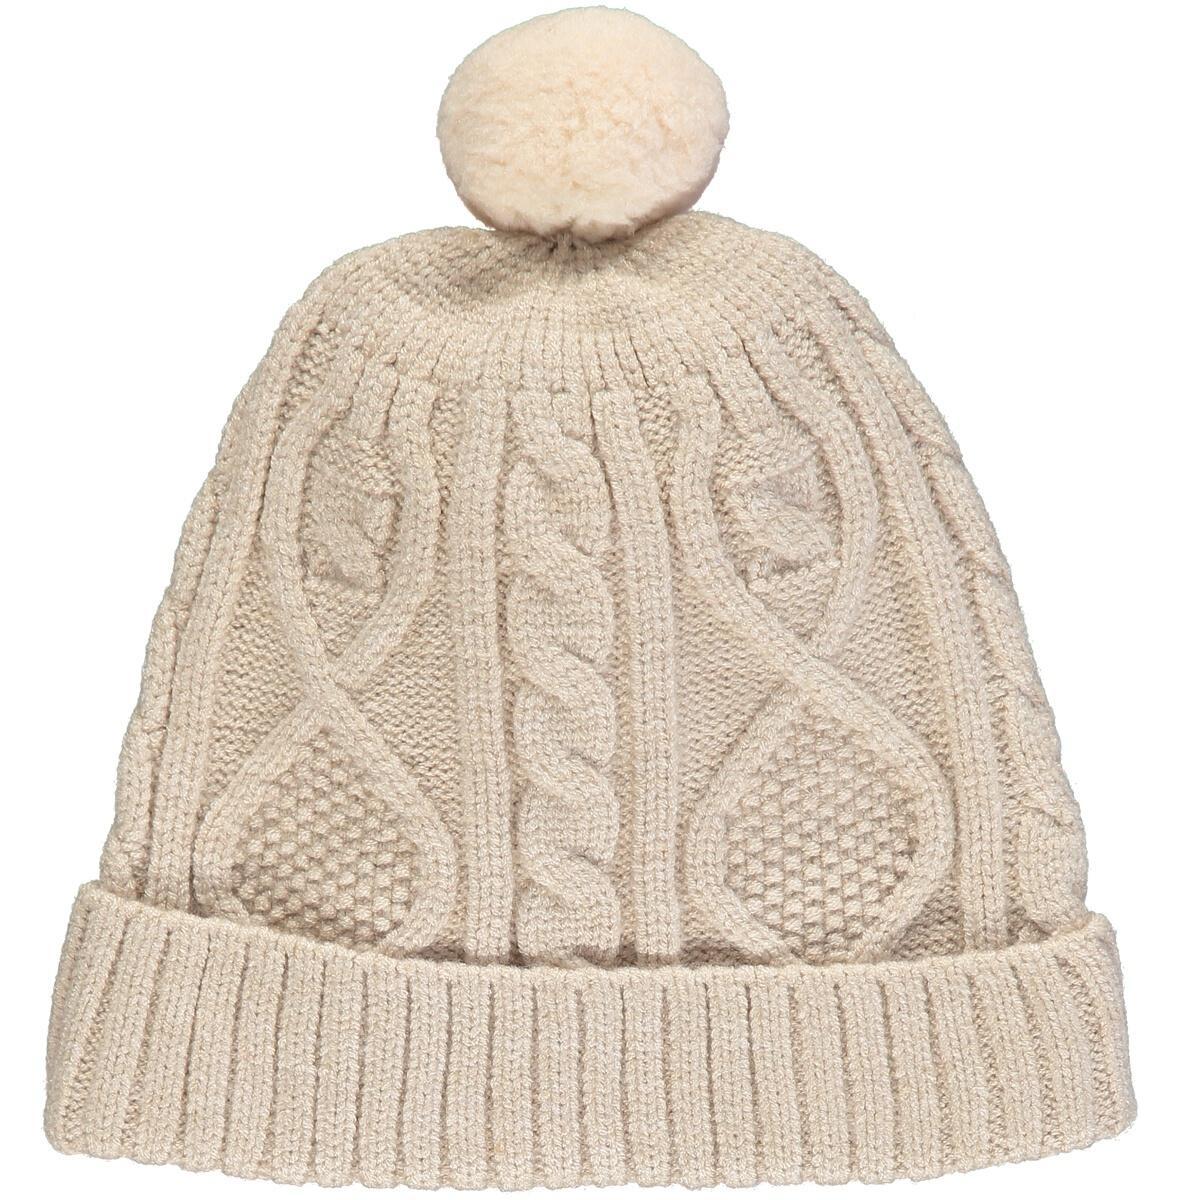 Oatmeal Maddy Knit Hat